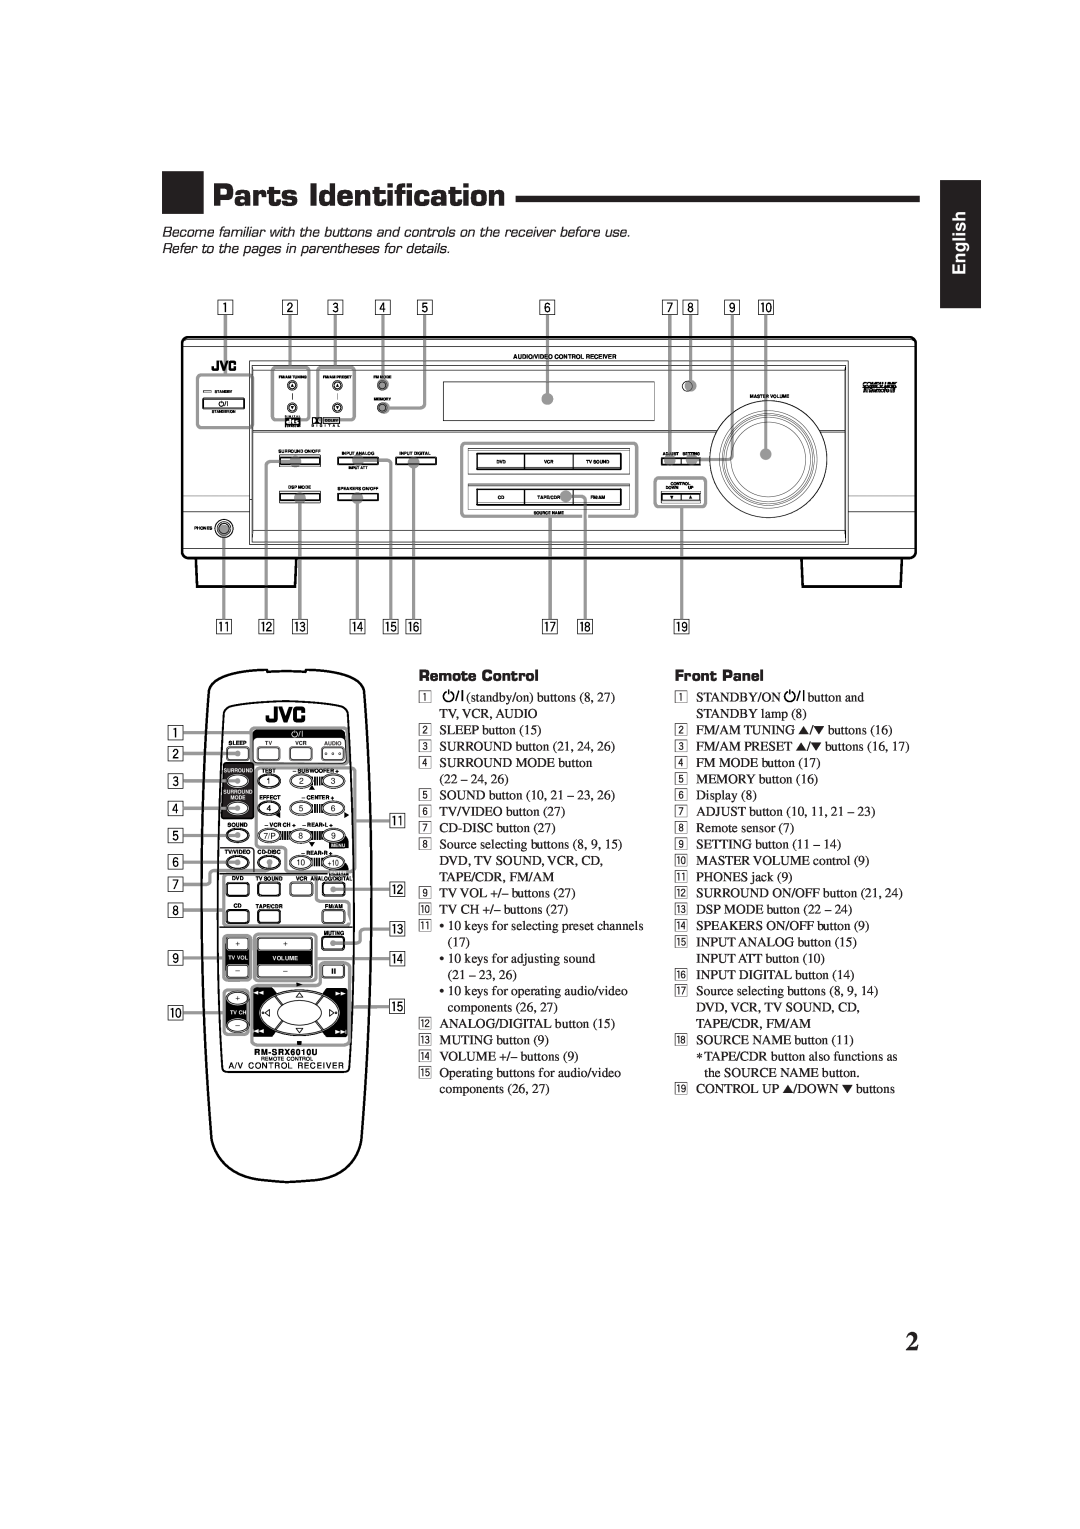 JVC RX-6012VSL manual Parts Identification, English, q w e r t y, 1 2 3 4 5 6 7 8 9 p, Remote Control, Front Panel 